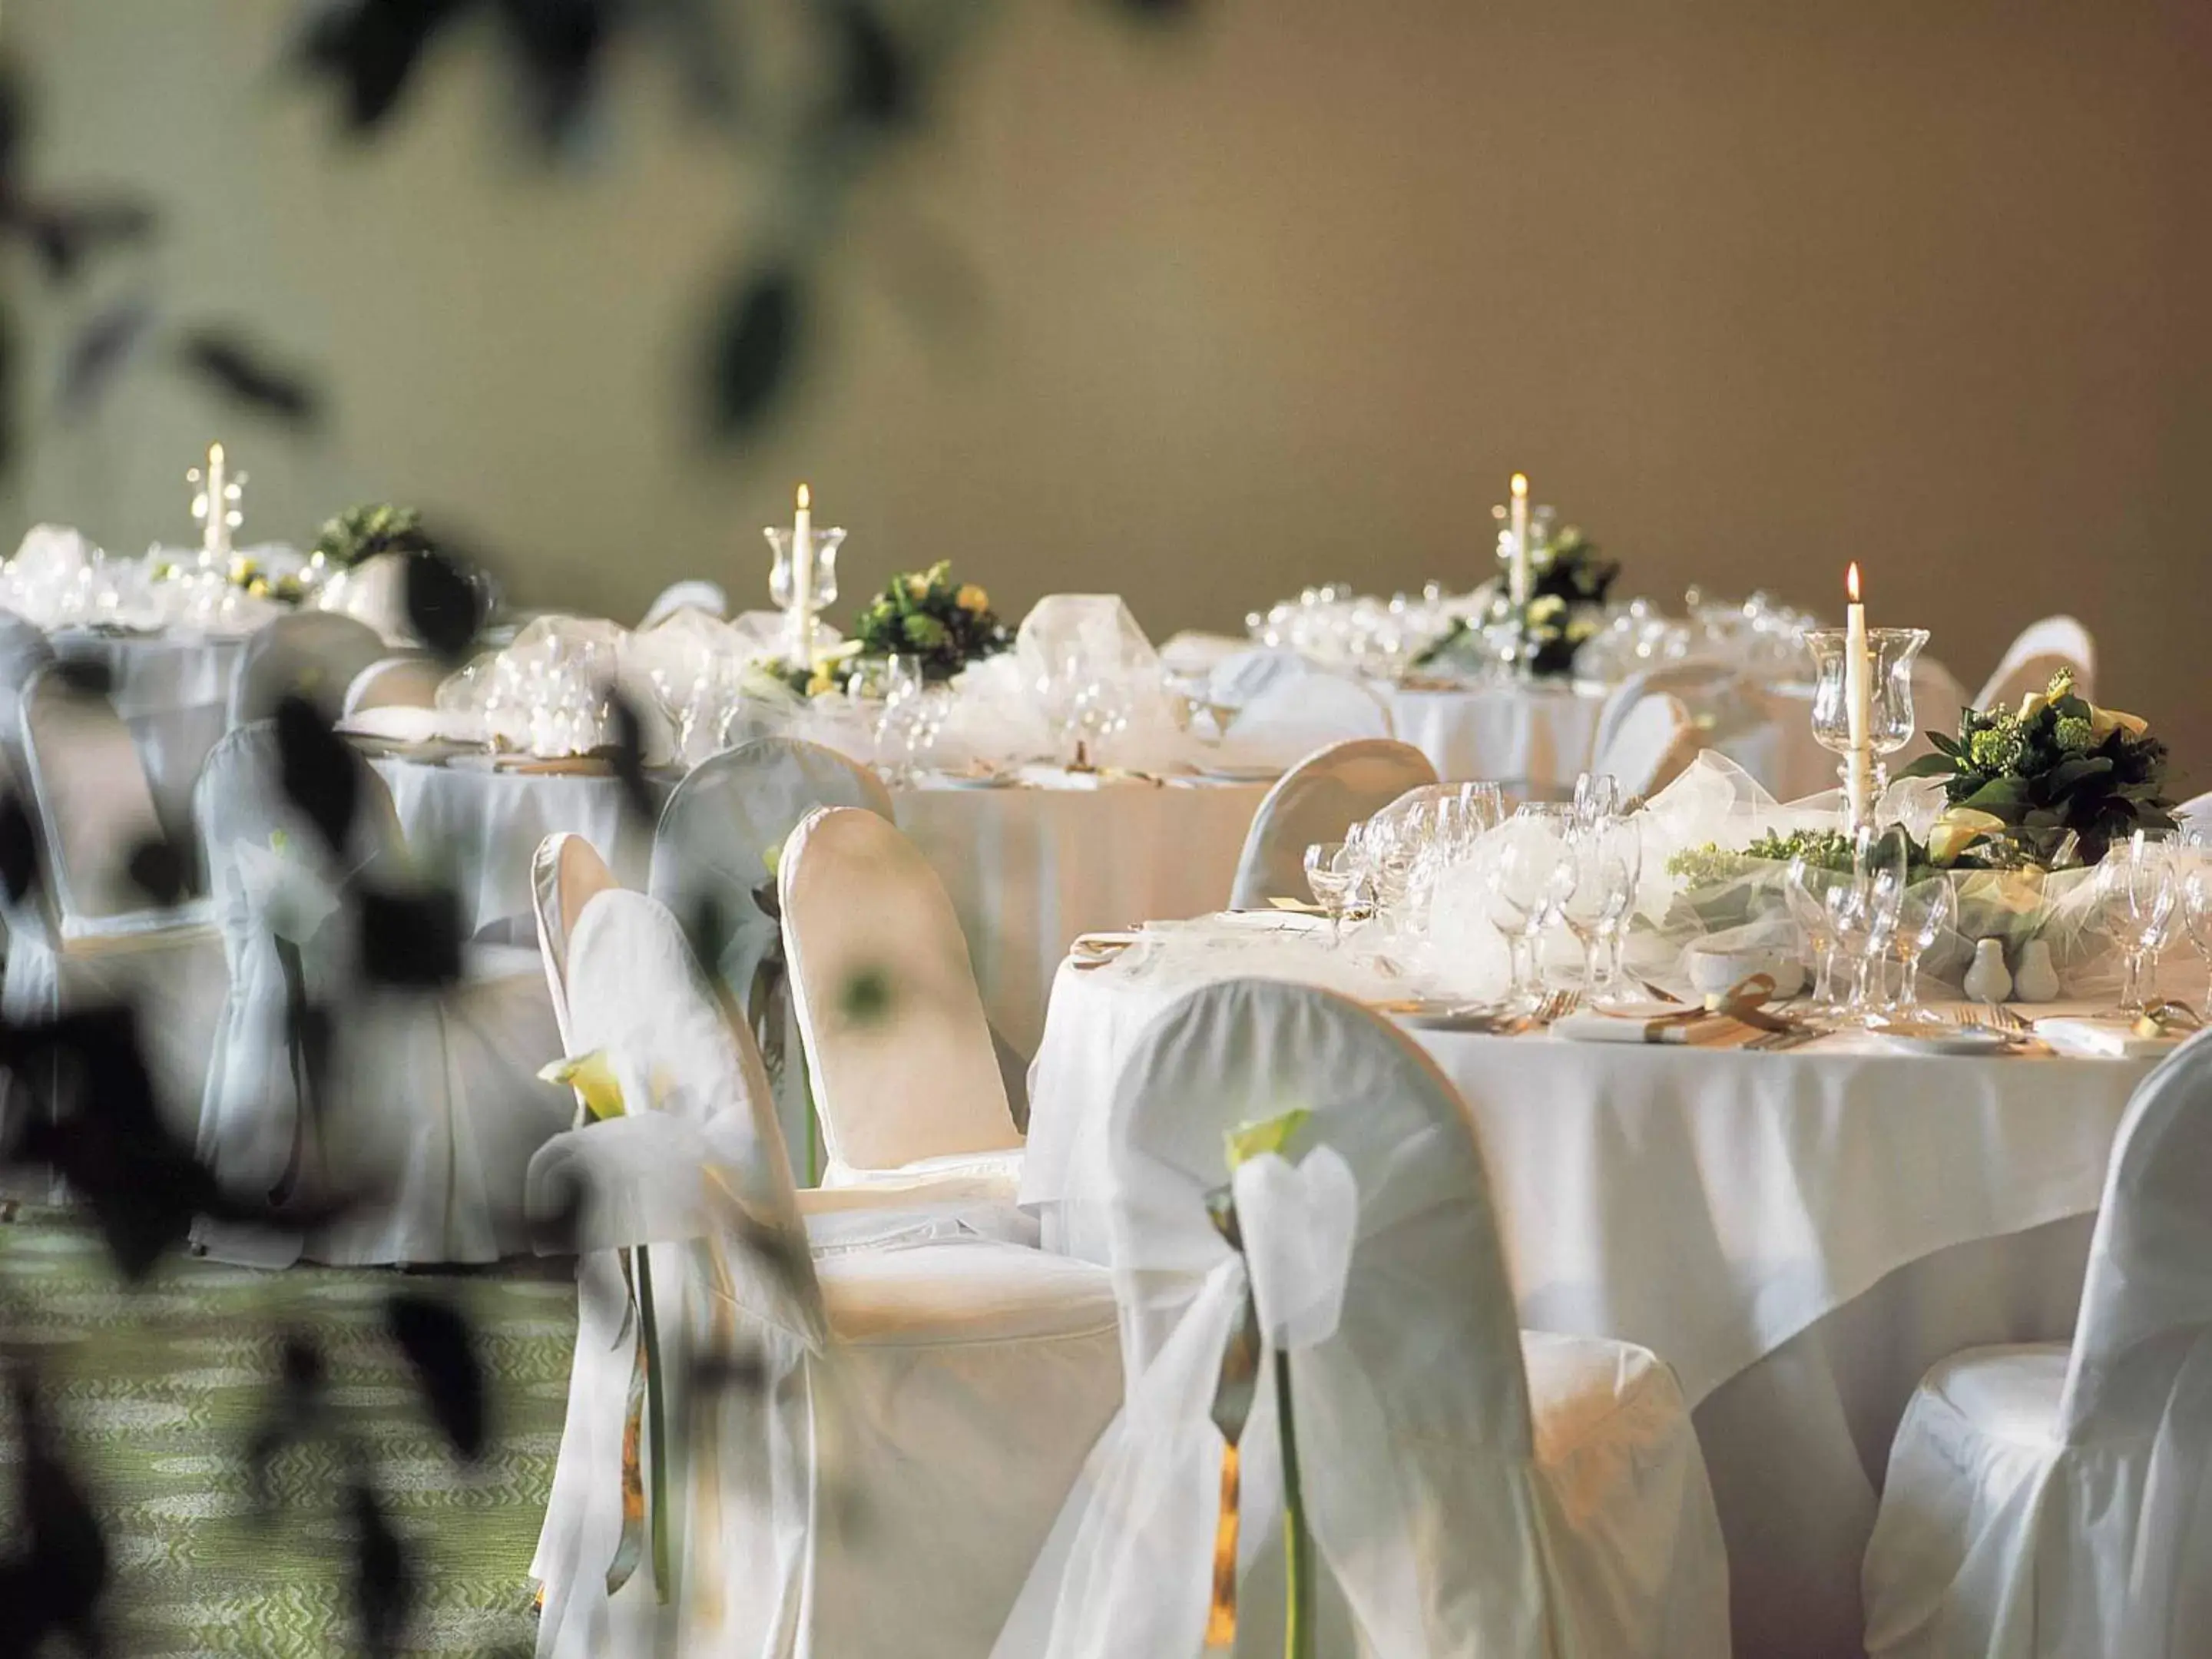 Banquet/Function facilities, Banquet Facilities in Vouliagmeni Suites